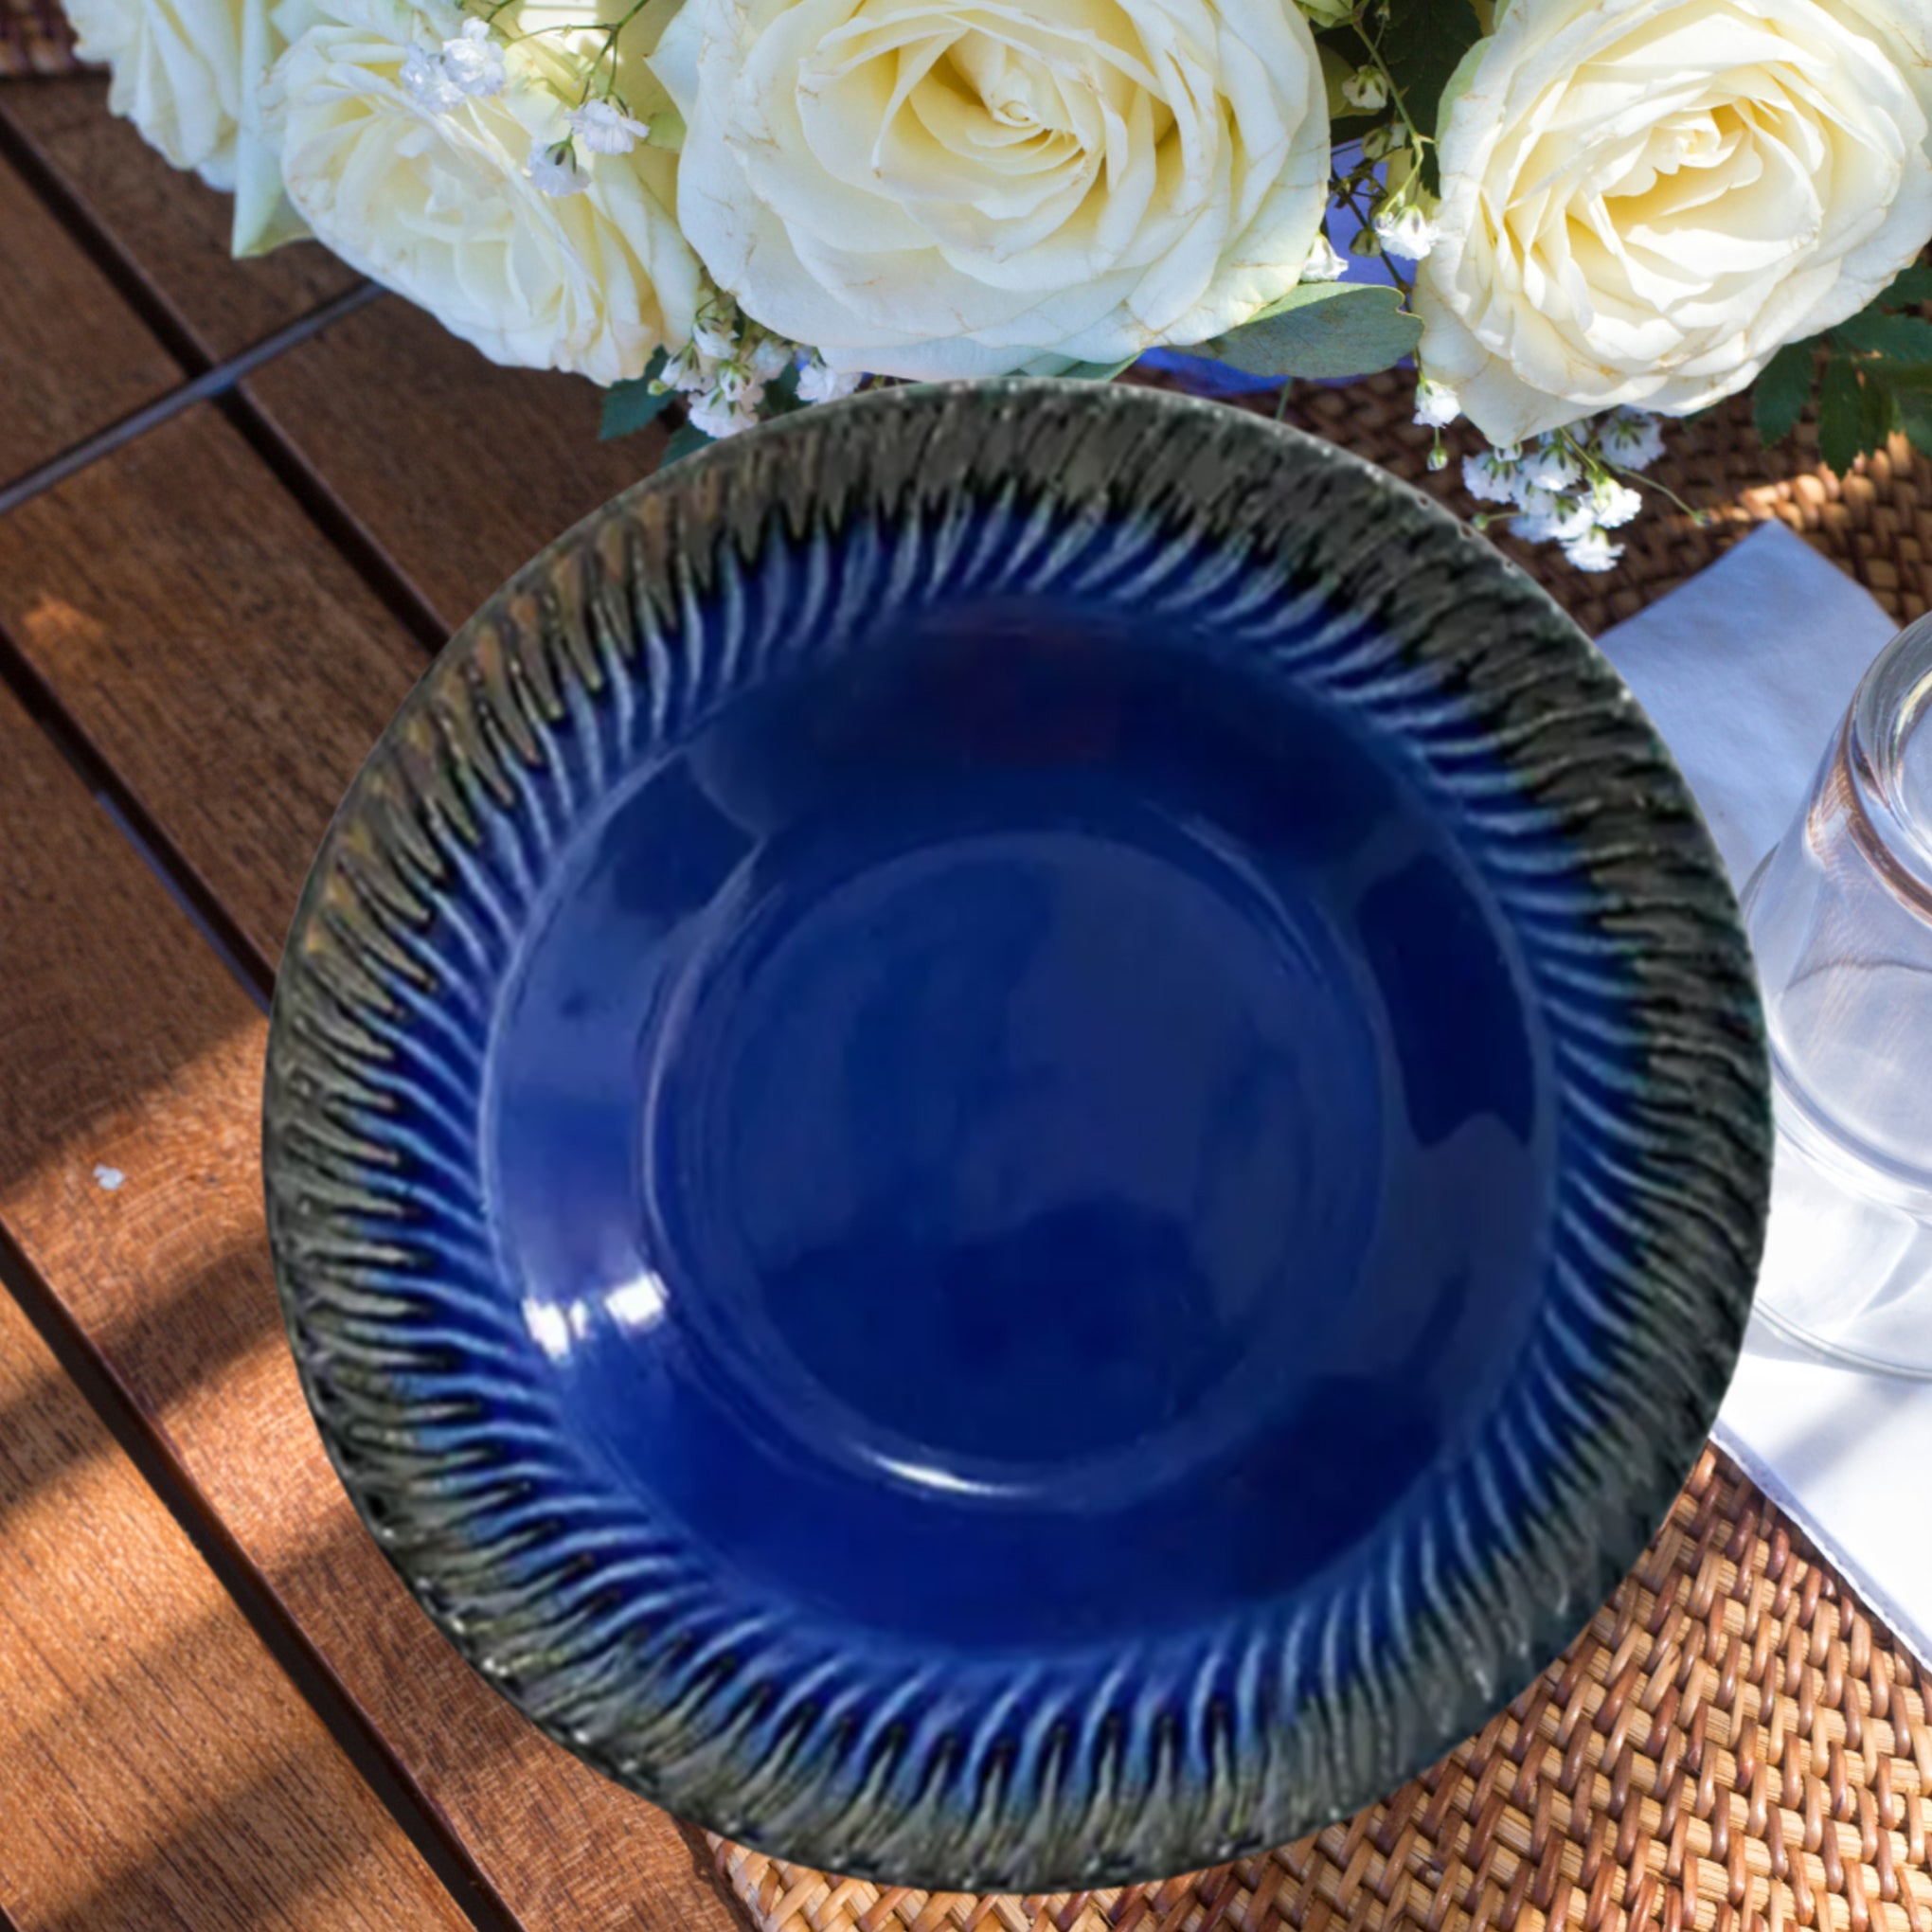 Blue Deep Ceramic Pasta Plates (Set of 4)